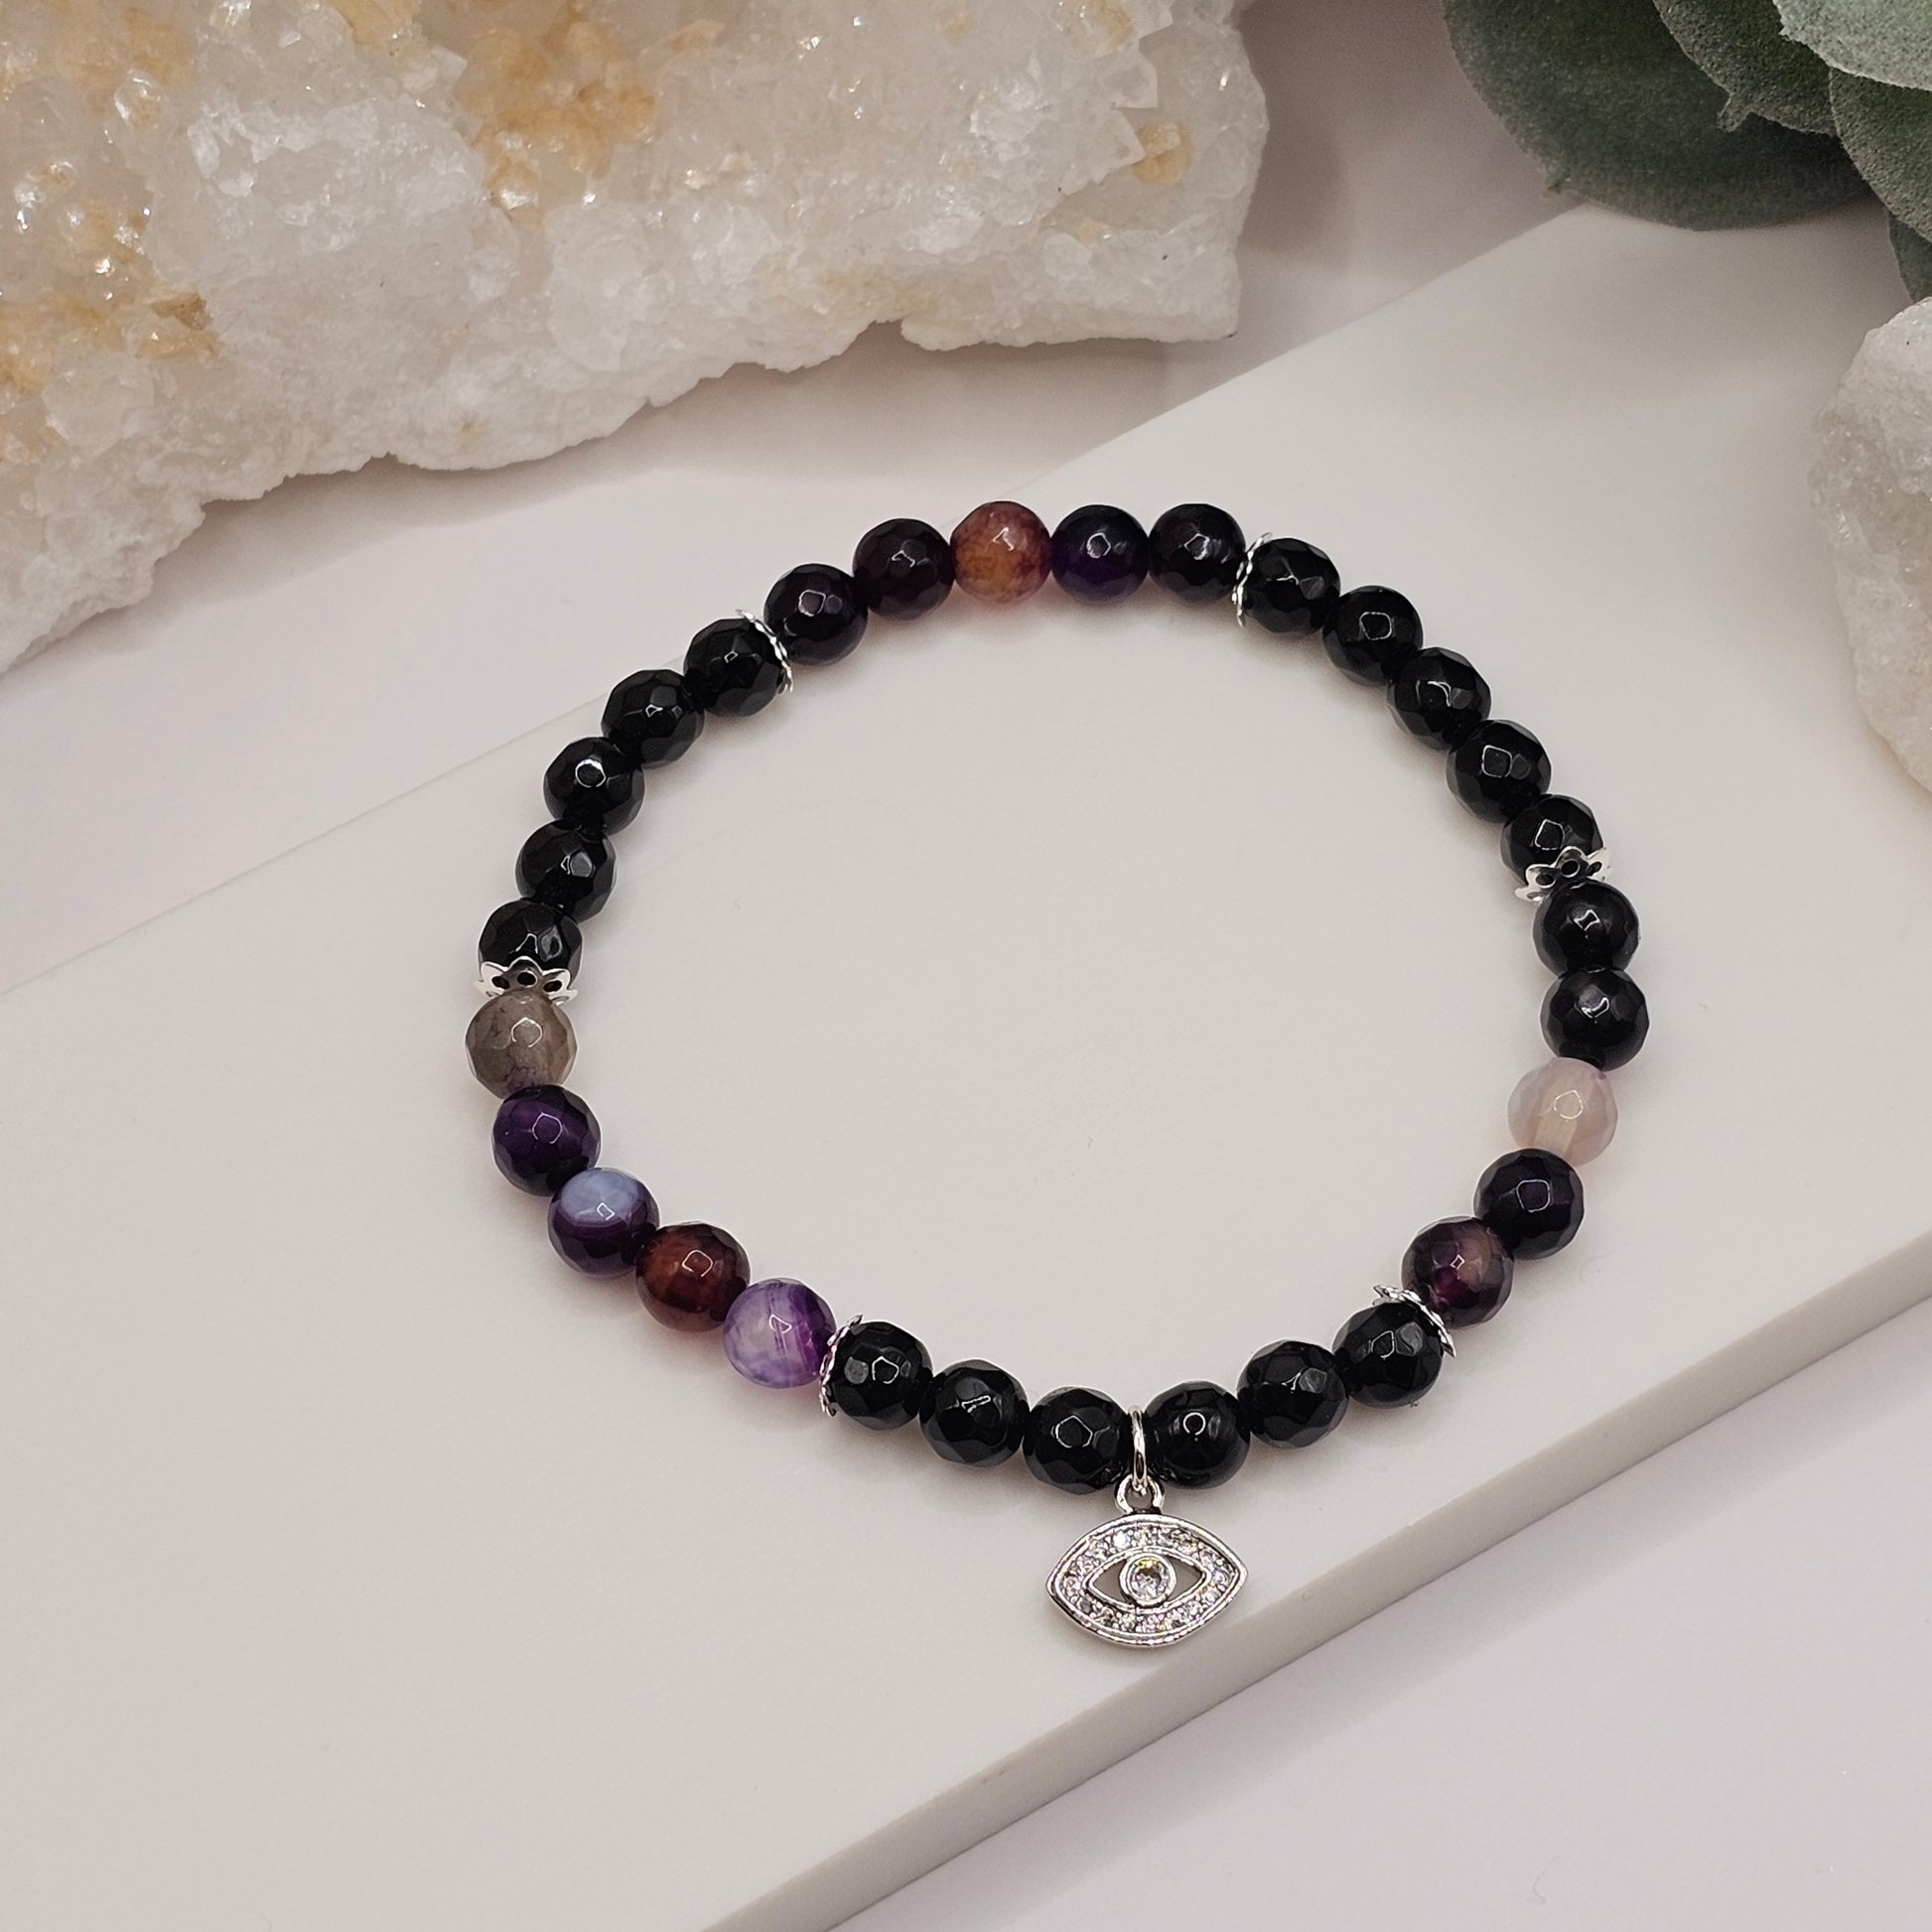 Protection bracelet - Madagascar Agate and Onyx Evil Eye Gemstone stretch bracelet | Valentines Day gift